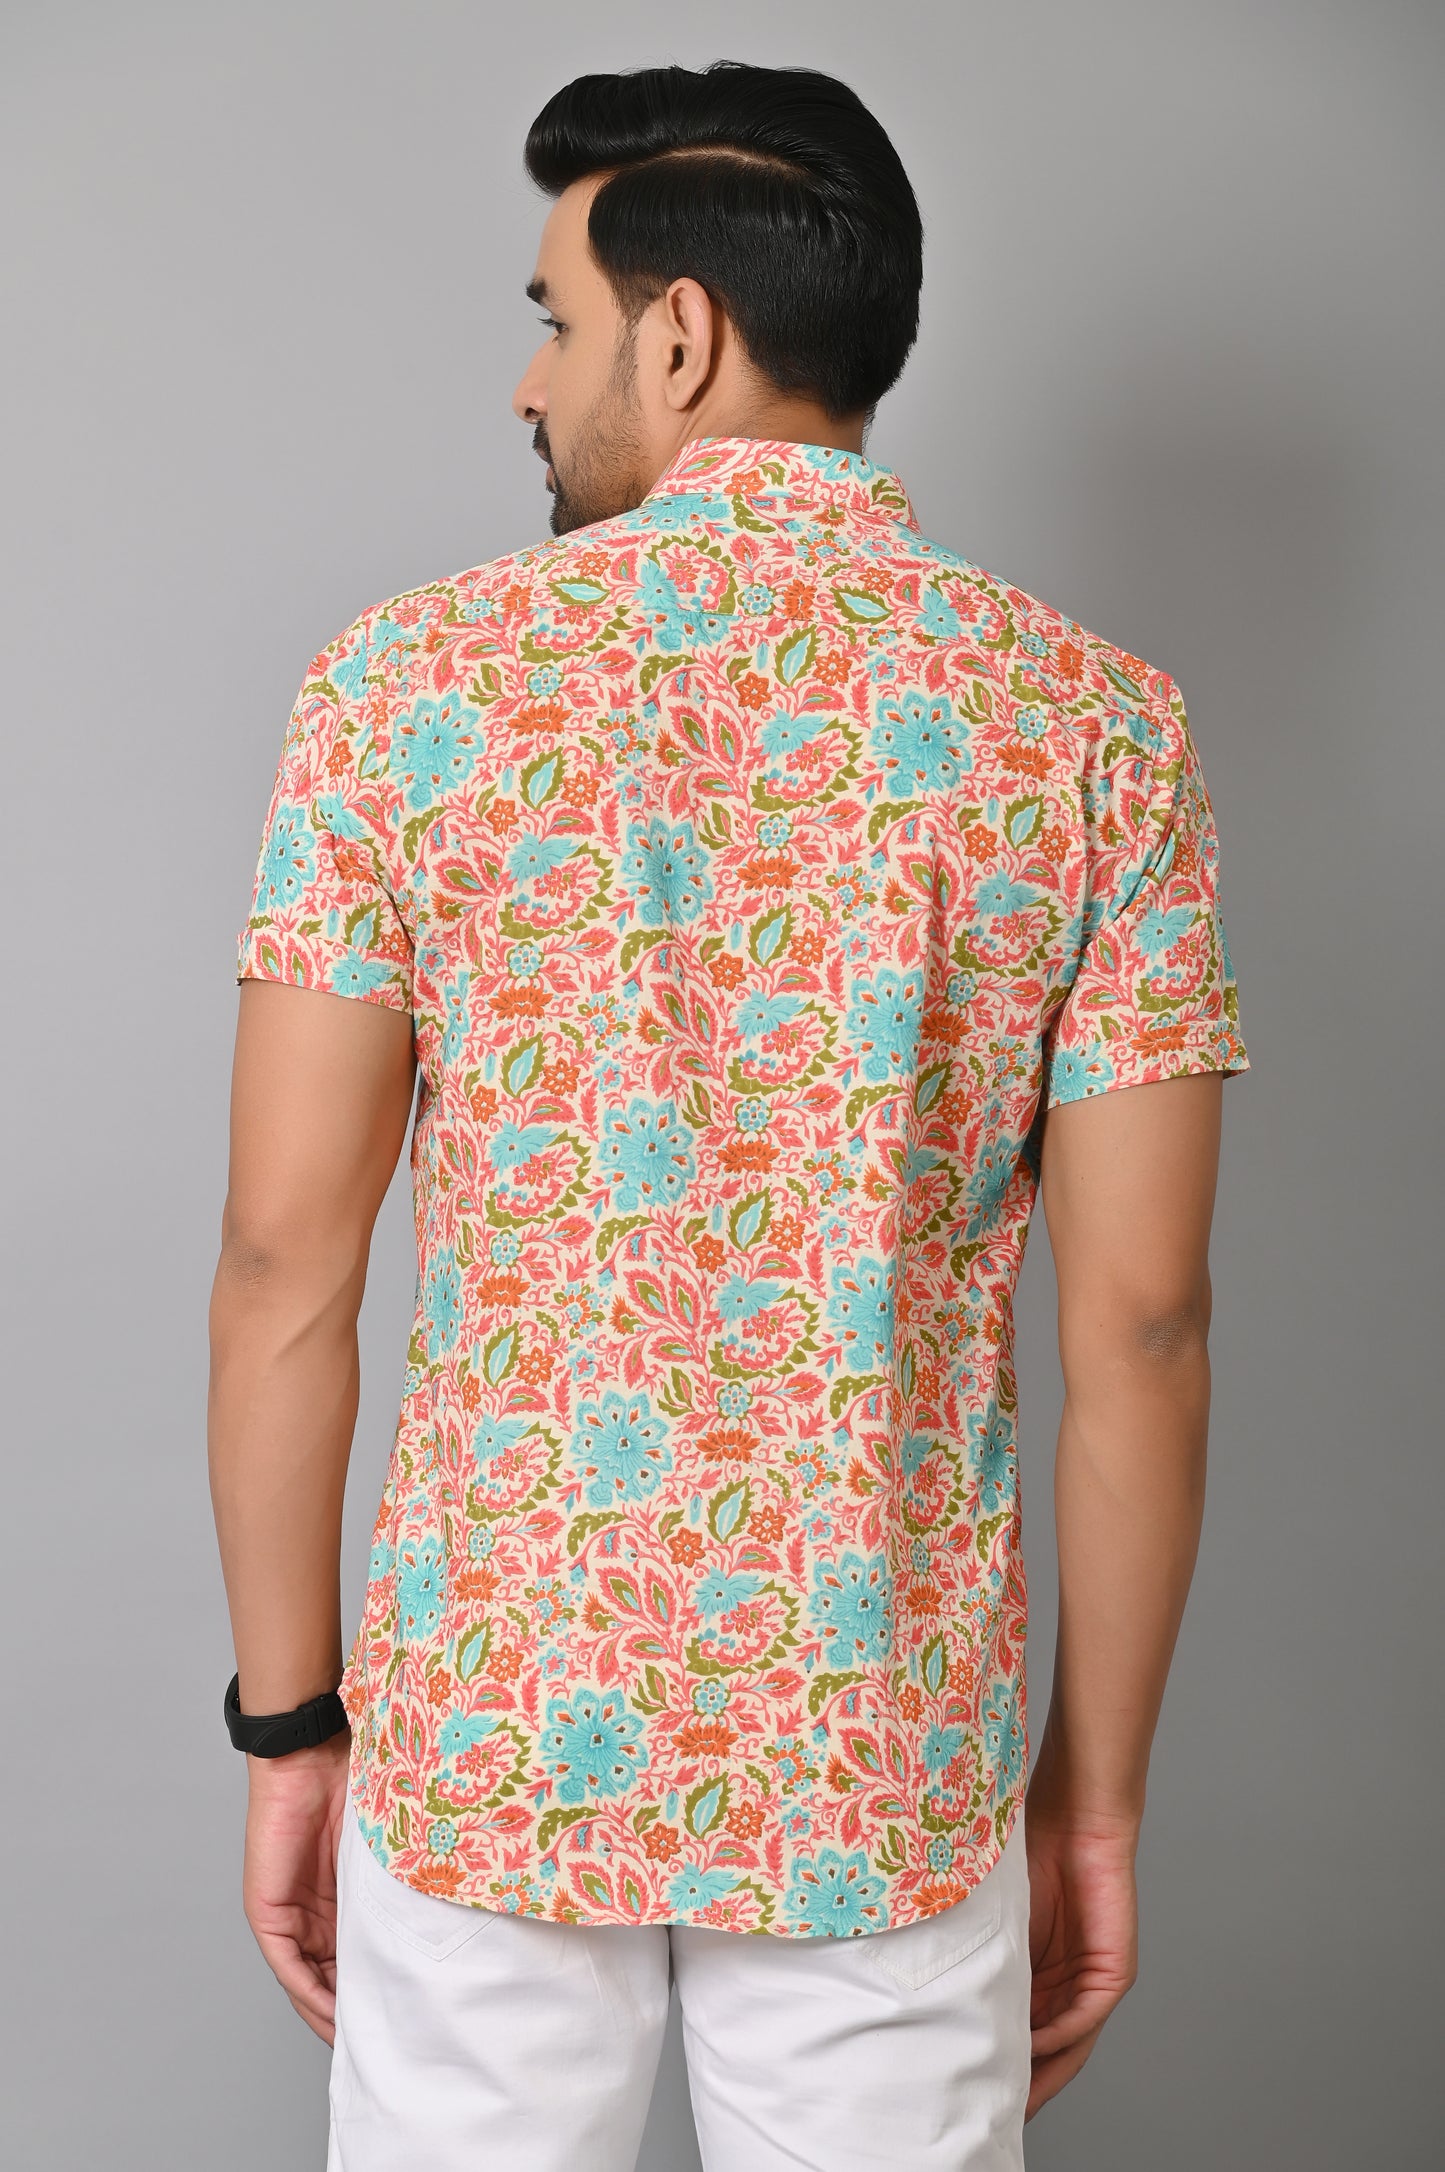 VJR Flower Stamped On Colorful Rhombus Premium Shirt